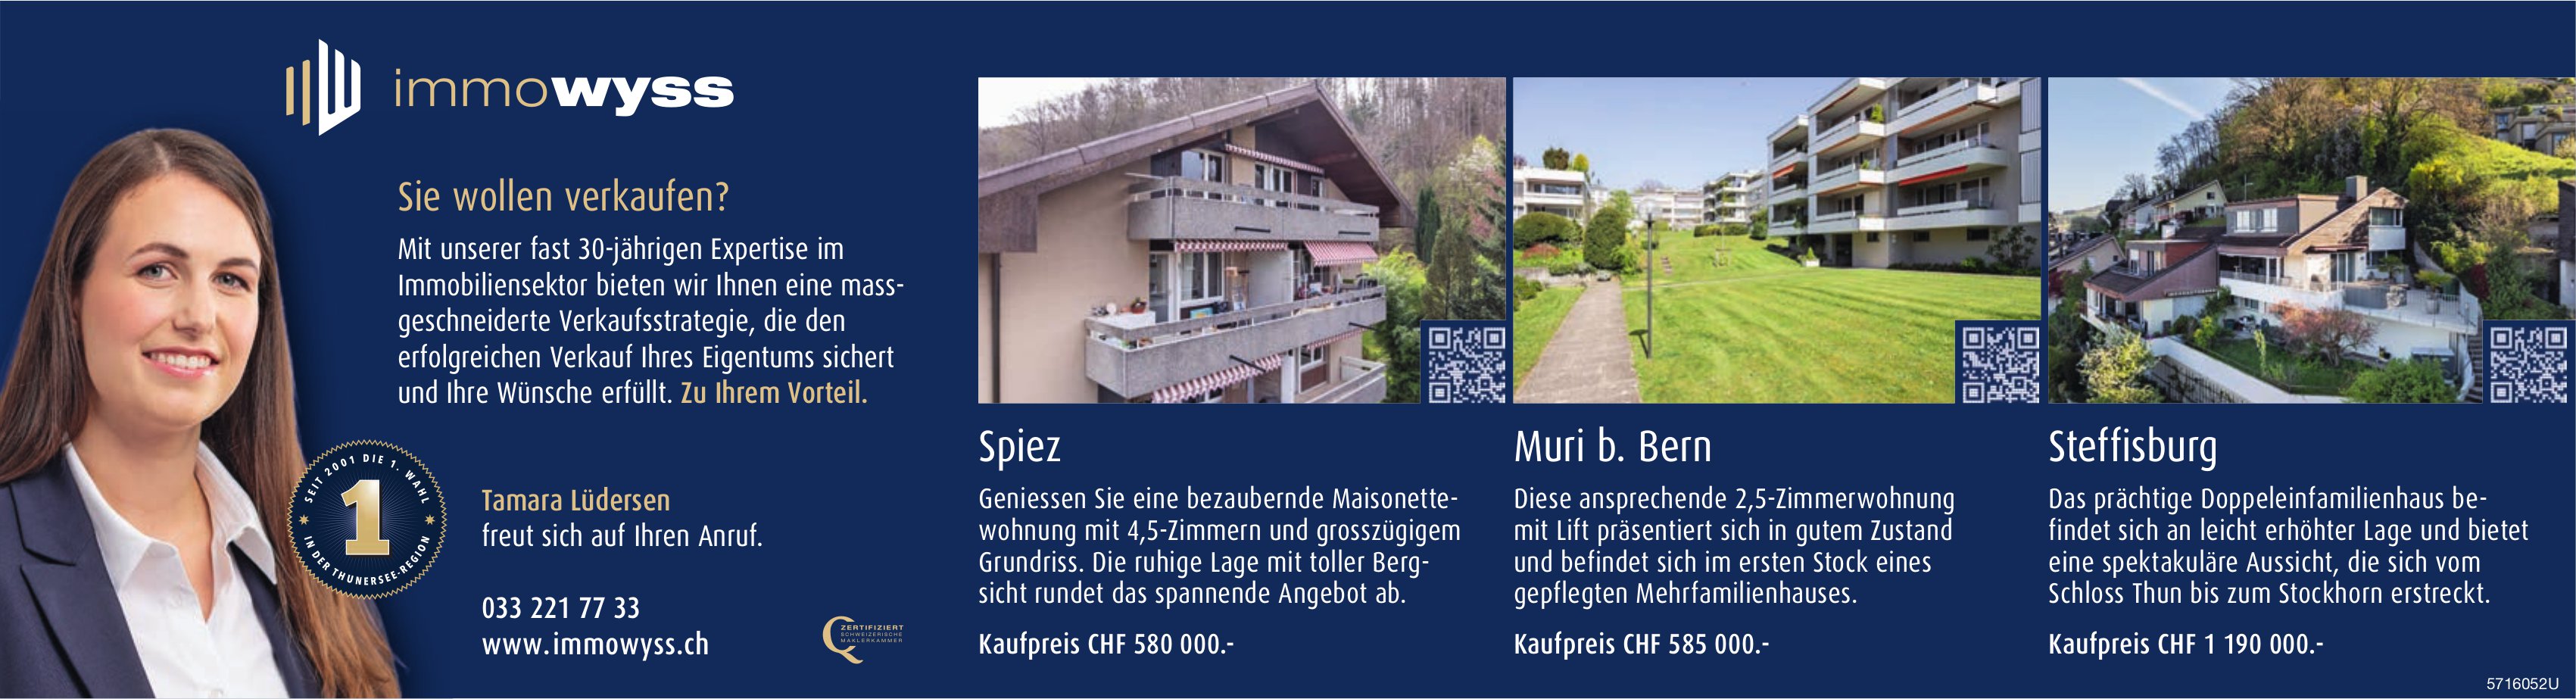 Immowyss - Speiz, Muri b. Bern,  Steffisburg, zu verkaufen